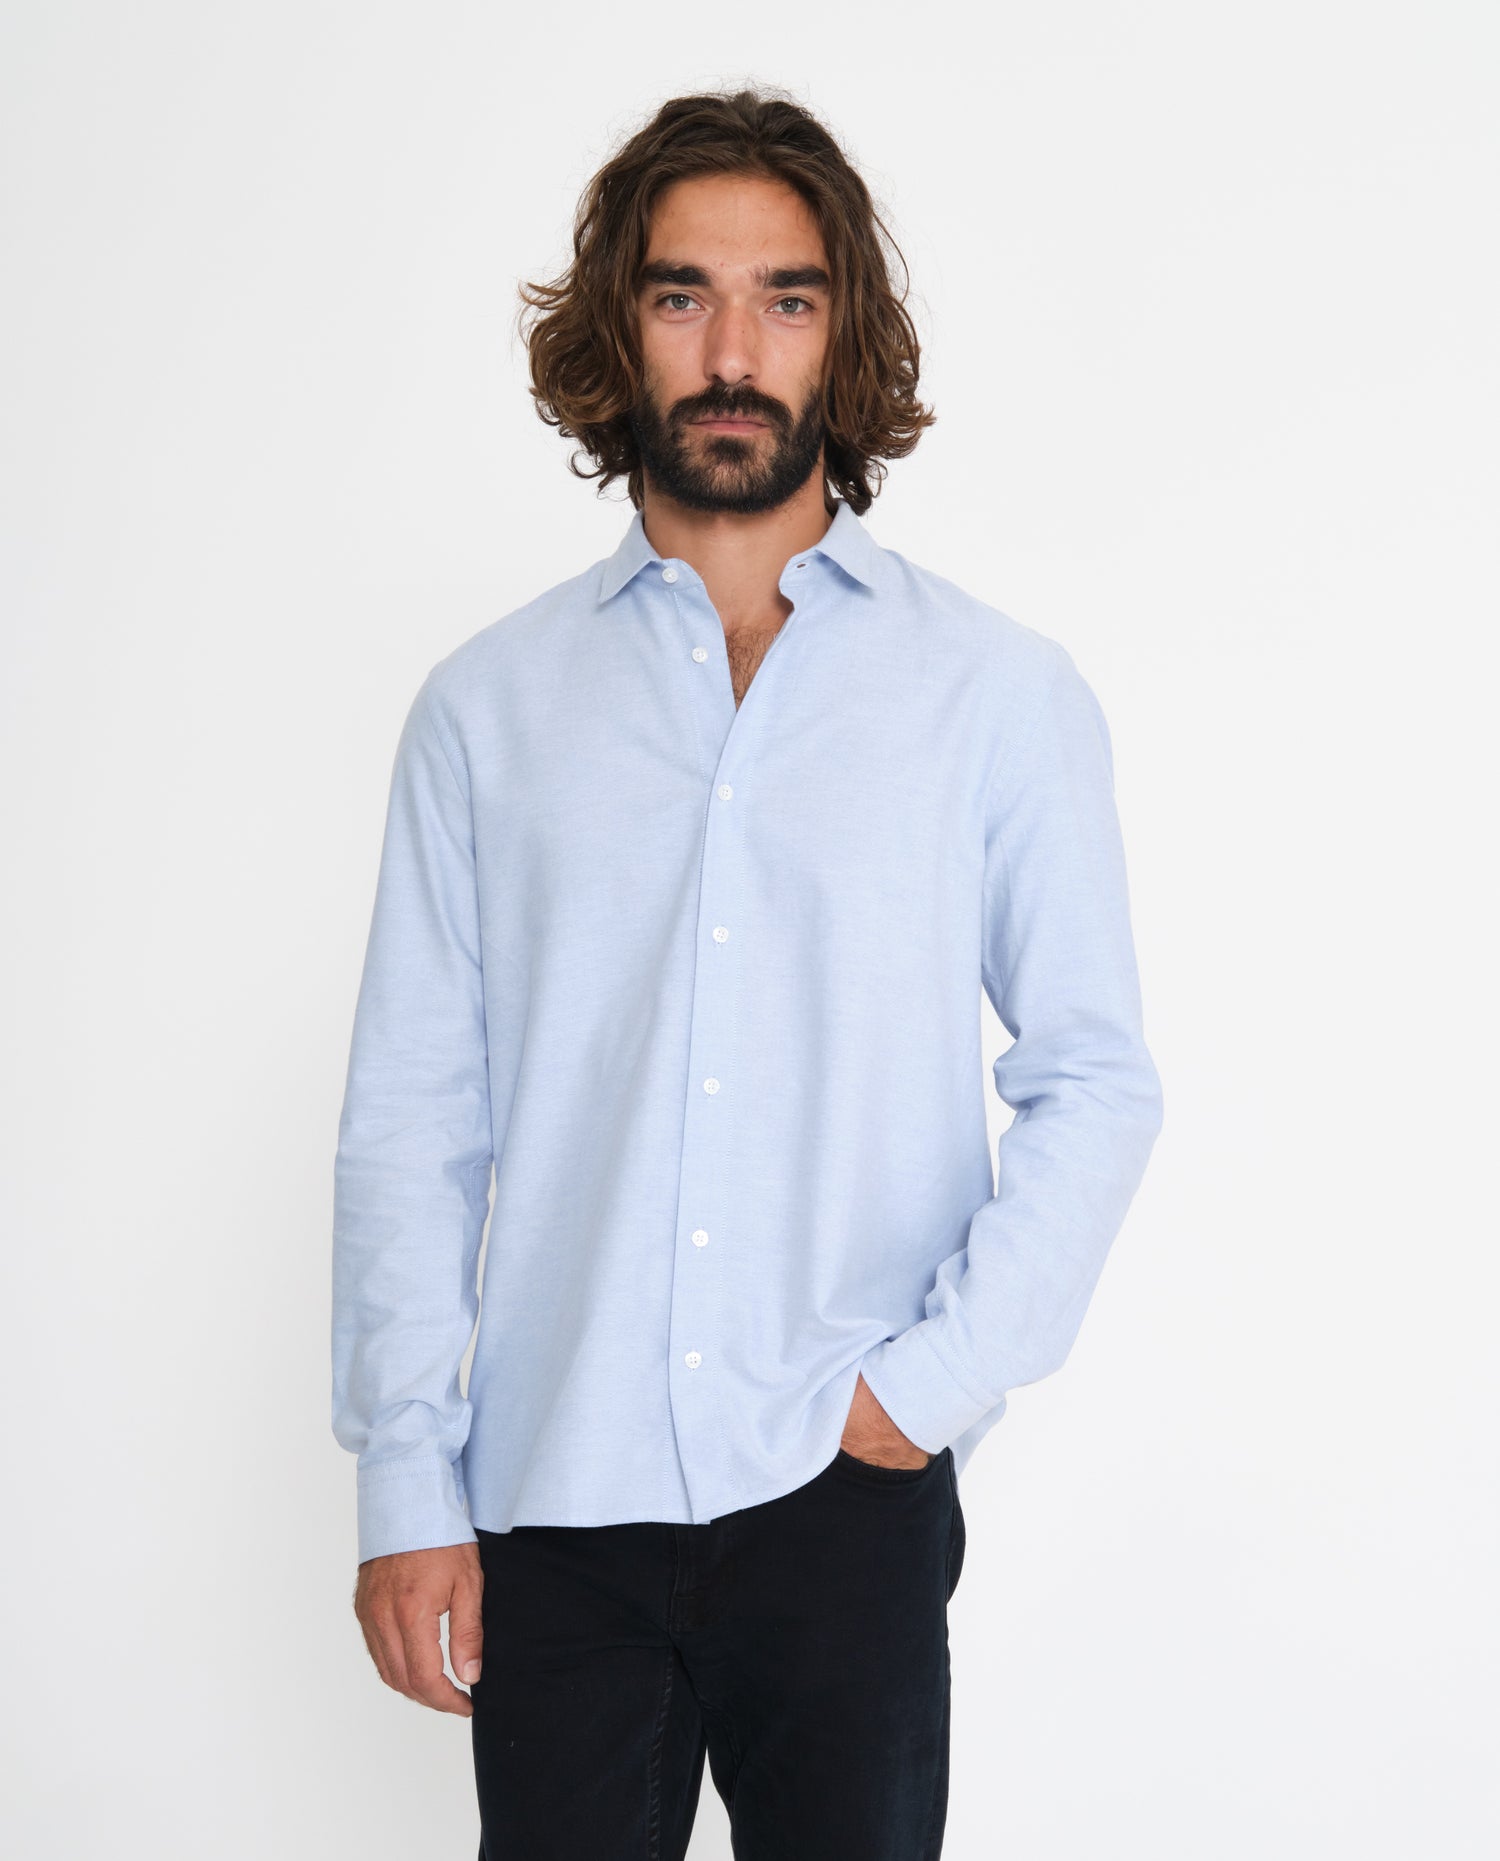 marché commun noyoco chemise ontario sky blue oxford coton biologique